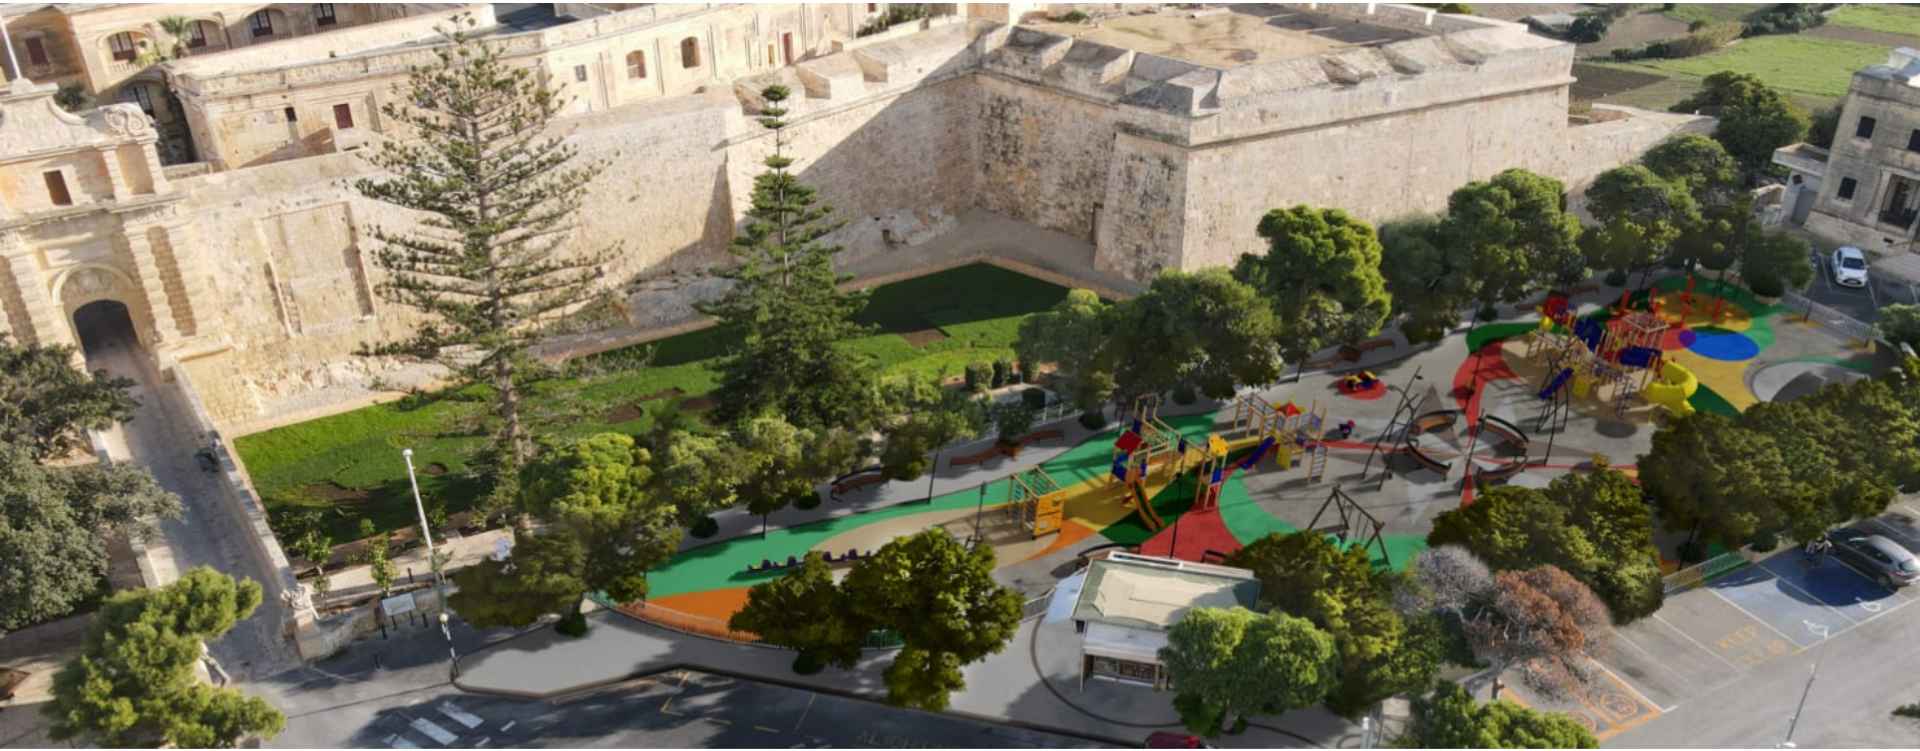 aerial view of Mdina Gate playground